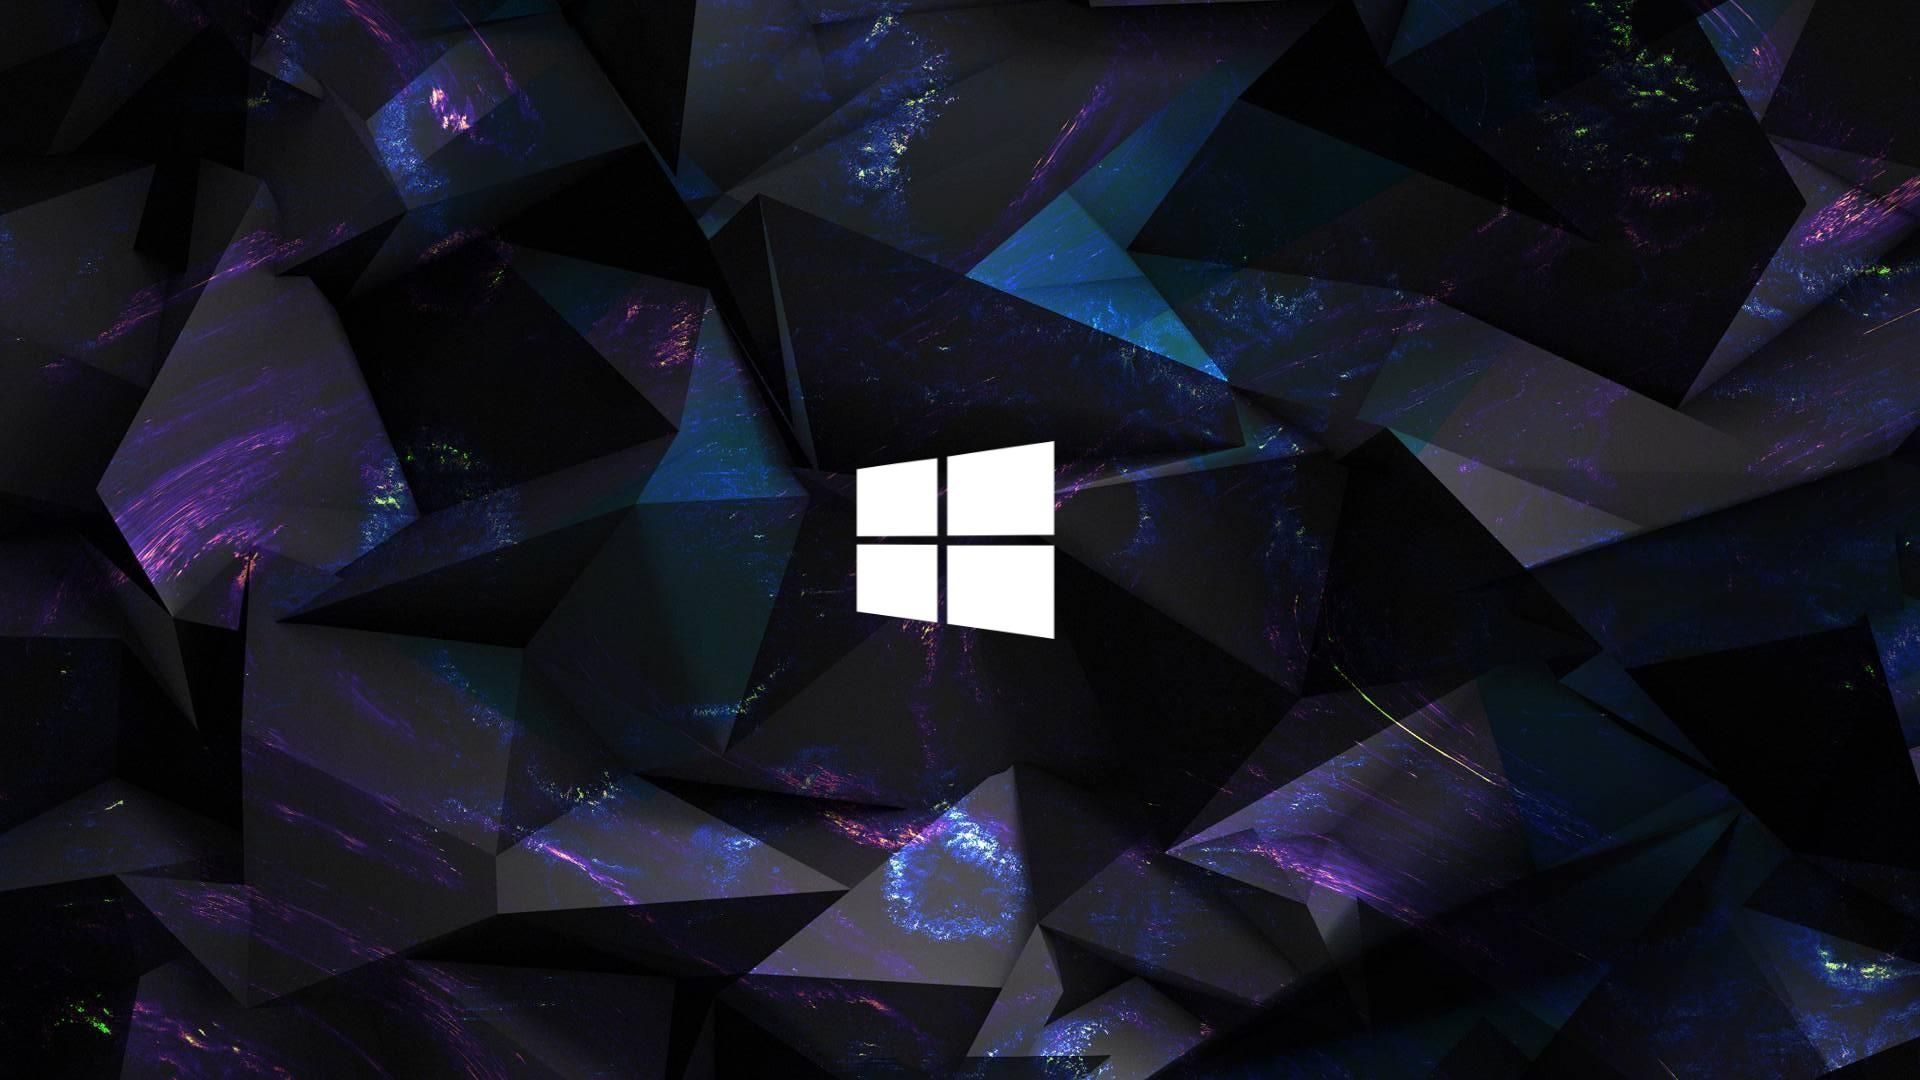  Windows 10 HD Hintergrundbild 1920x1080. Windows 10 #Hdwallpaper #wallpaper #image. Wallpaper windows Computer wallpaper hd, Windows wallpaper